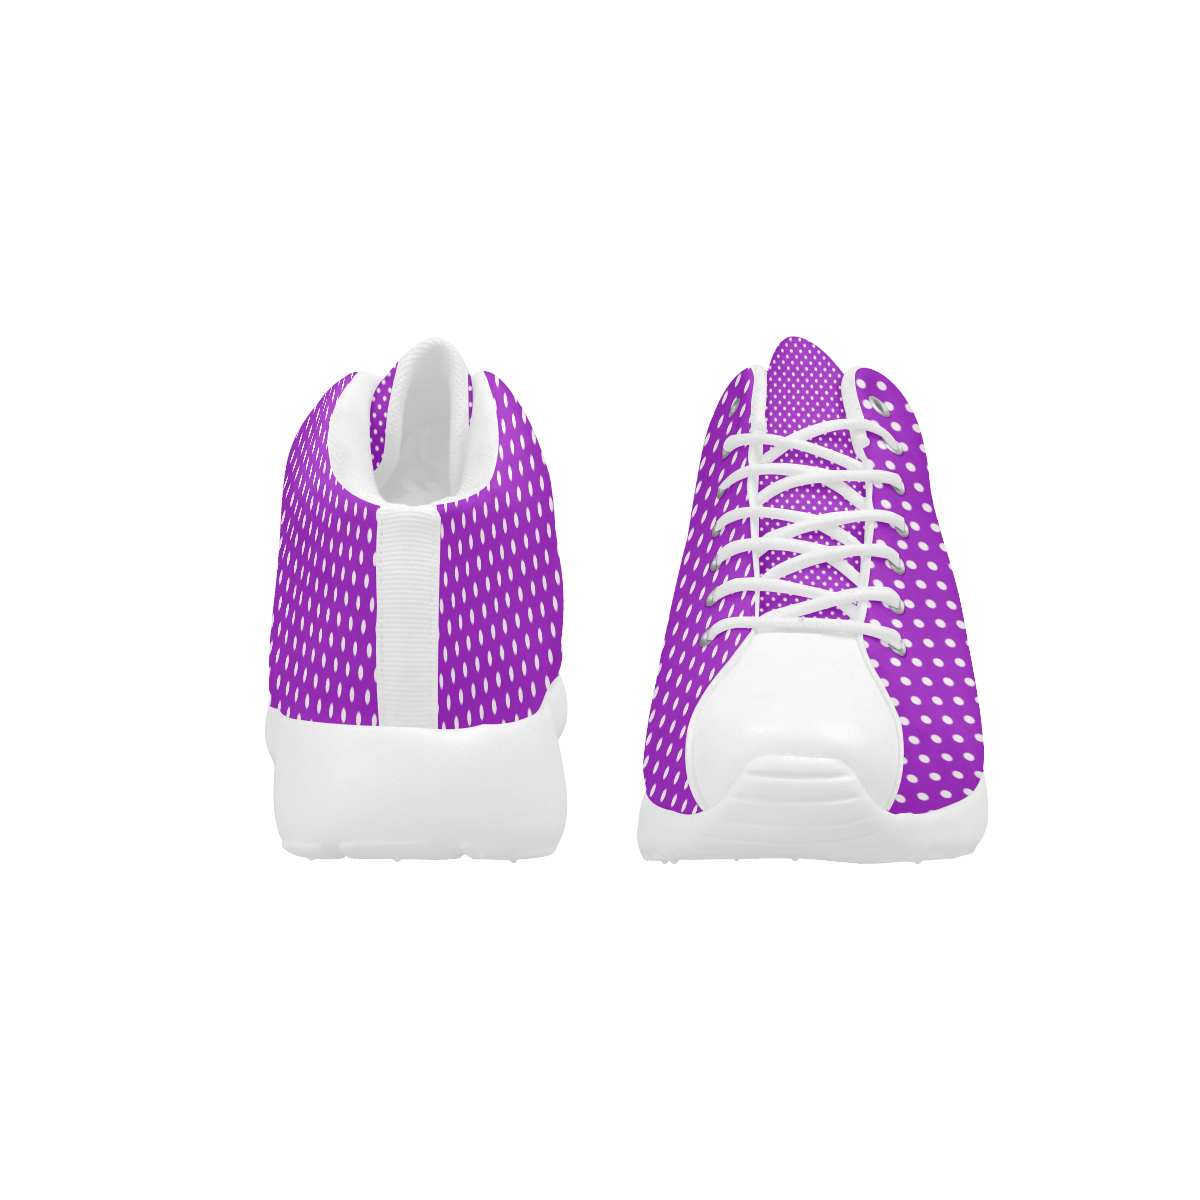 Lavander polka dots Women's Basketball Training Shoes/Large Size (Model 47502)